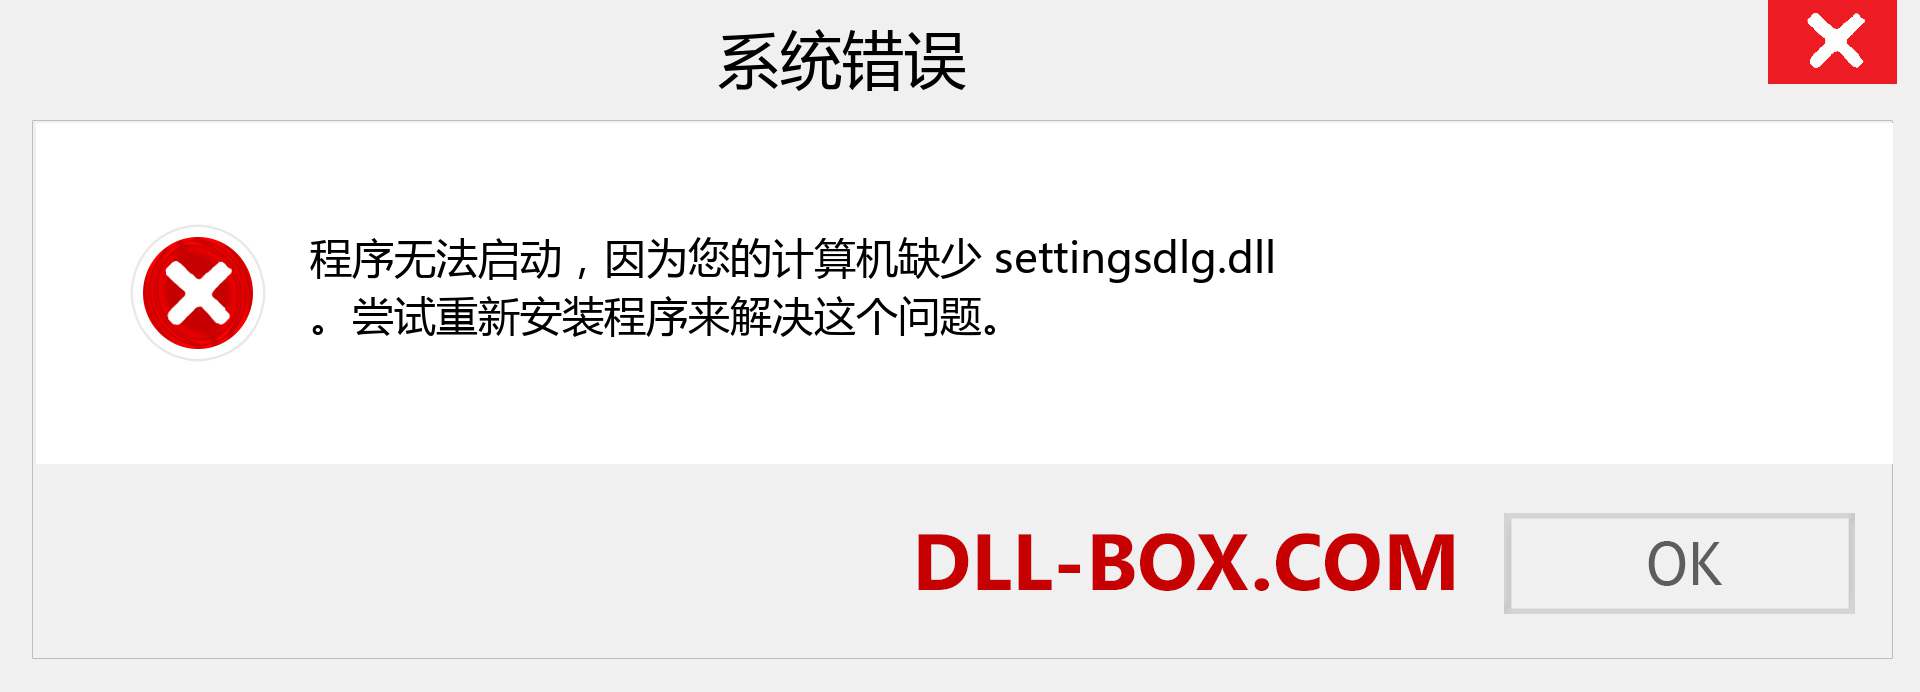 settingsdlg.dll 文件丢失？。 适用于 Windows 7、8、10 的下载 - 修复 Windows、照片、图像上的 settingsdlg dll 丢失错误